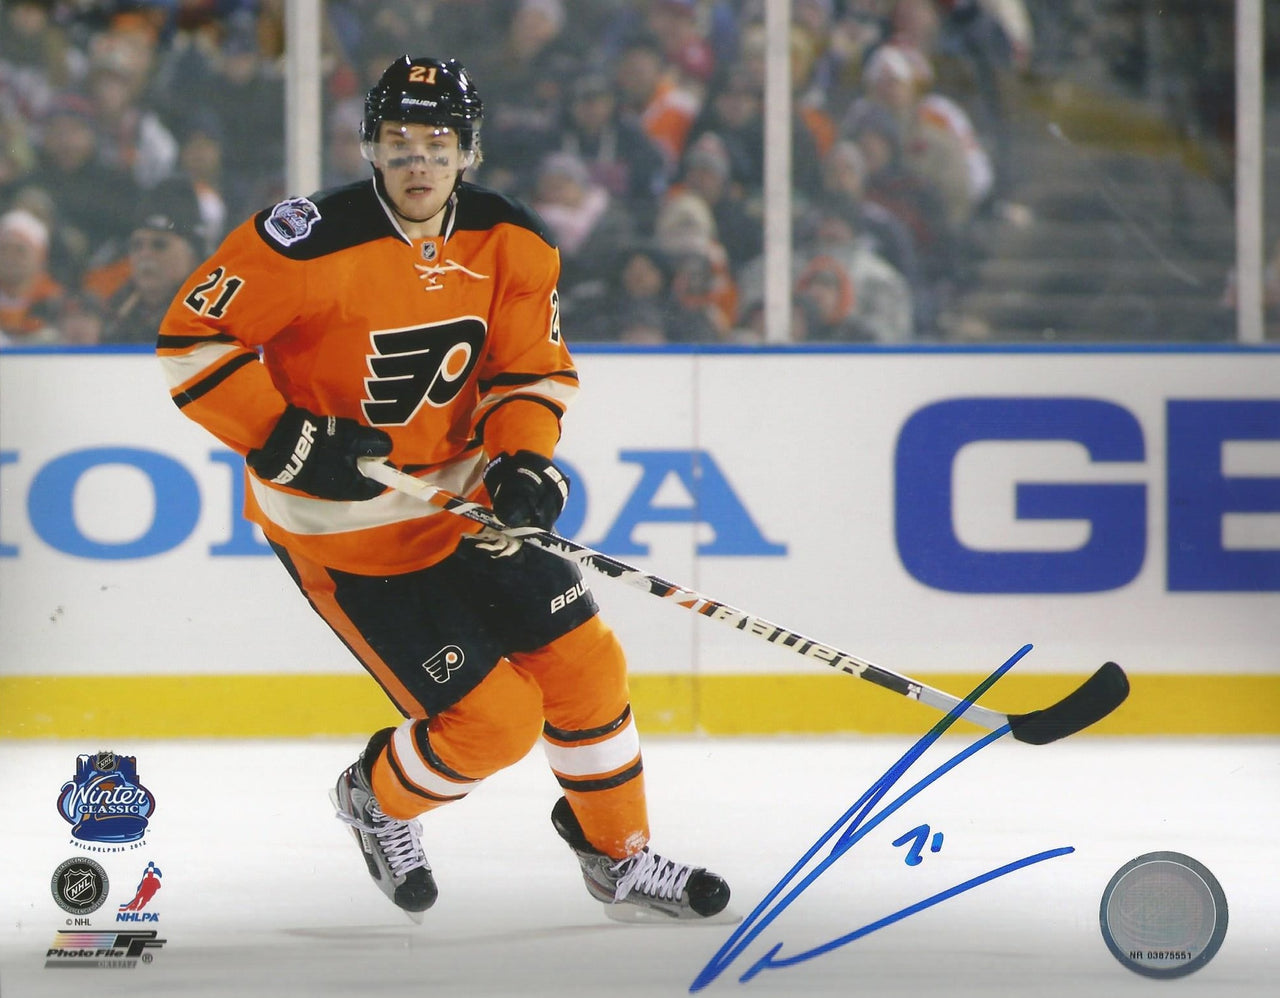 James Van Riemsdyk 2012 Winter Classic Autographed Philadelphia Flyers Hockey Photo - Dynasty Sports & Framing 